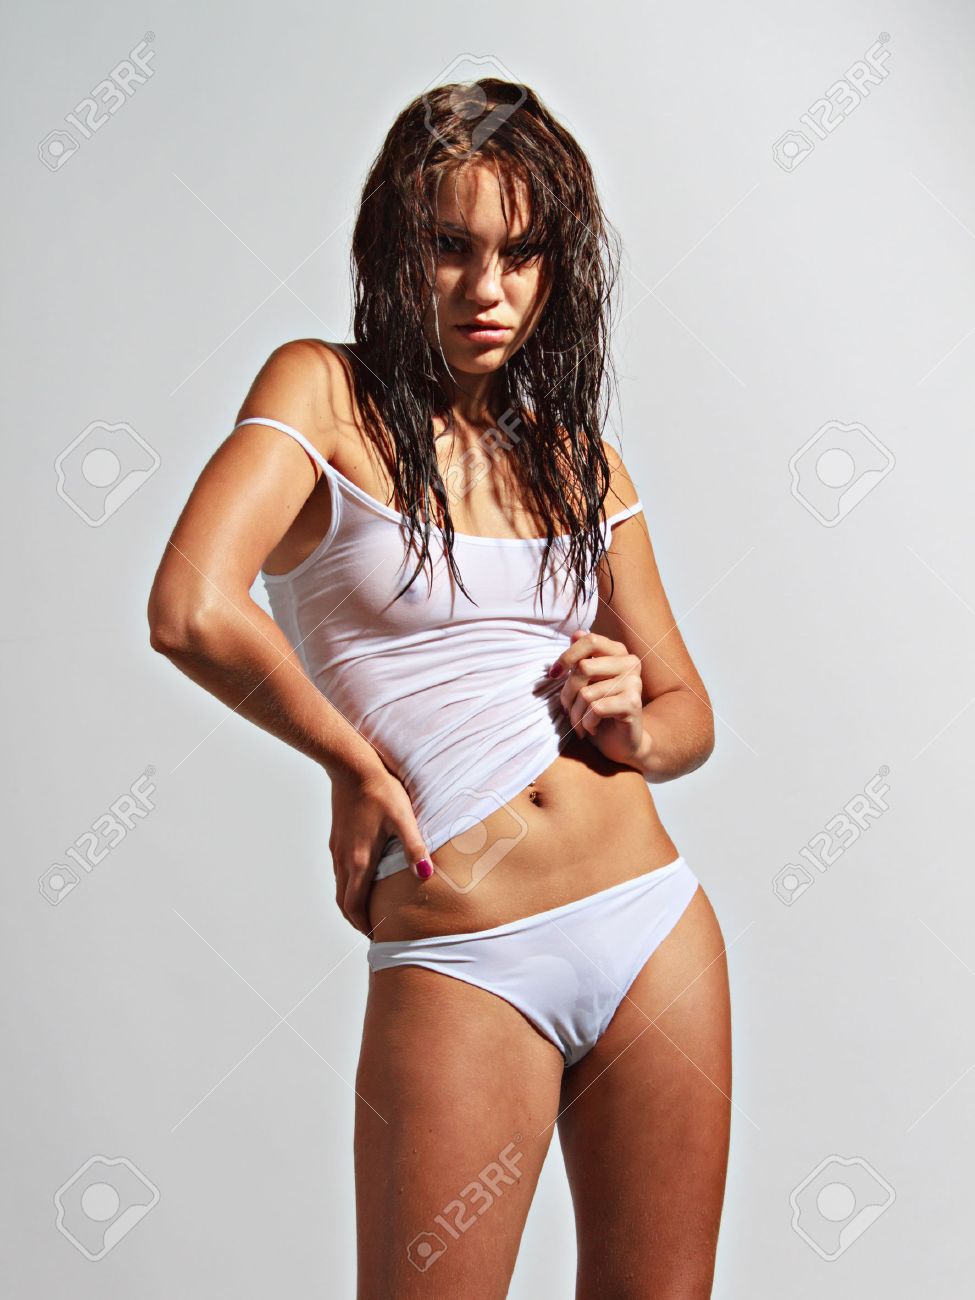 andrew wireman add photo pictures of girls in wet panties